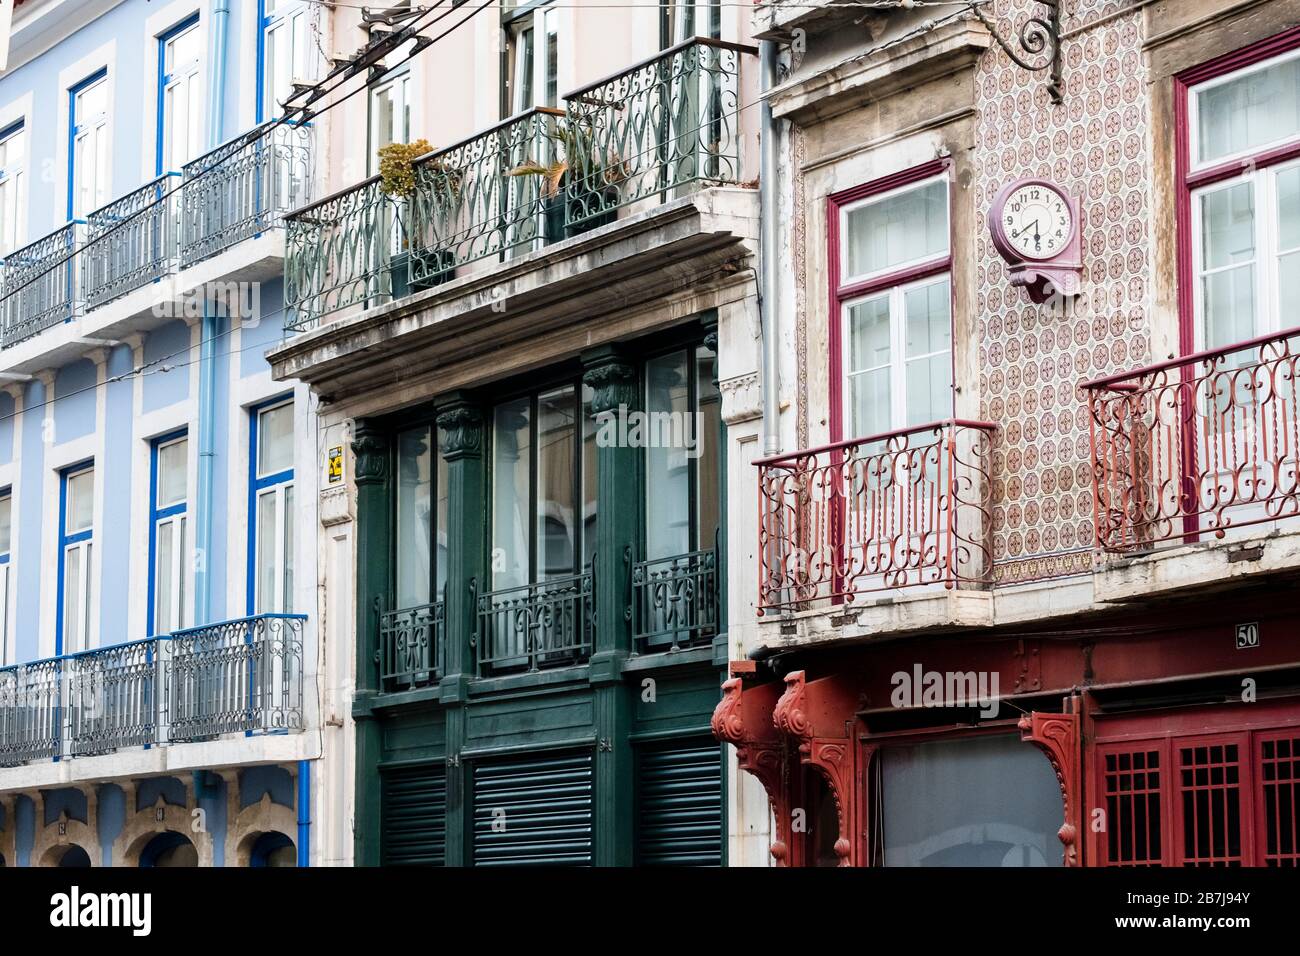 Building facades with traditional Portuguese tiles, Lisbon Stock Photo